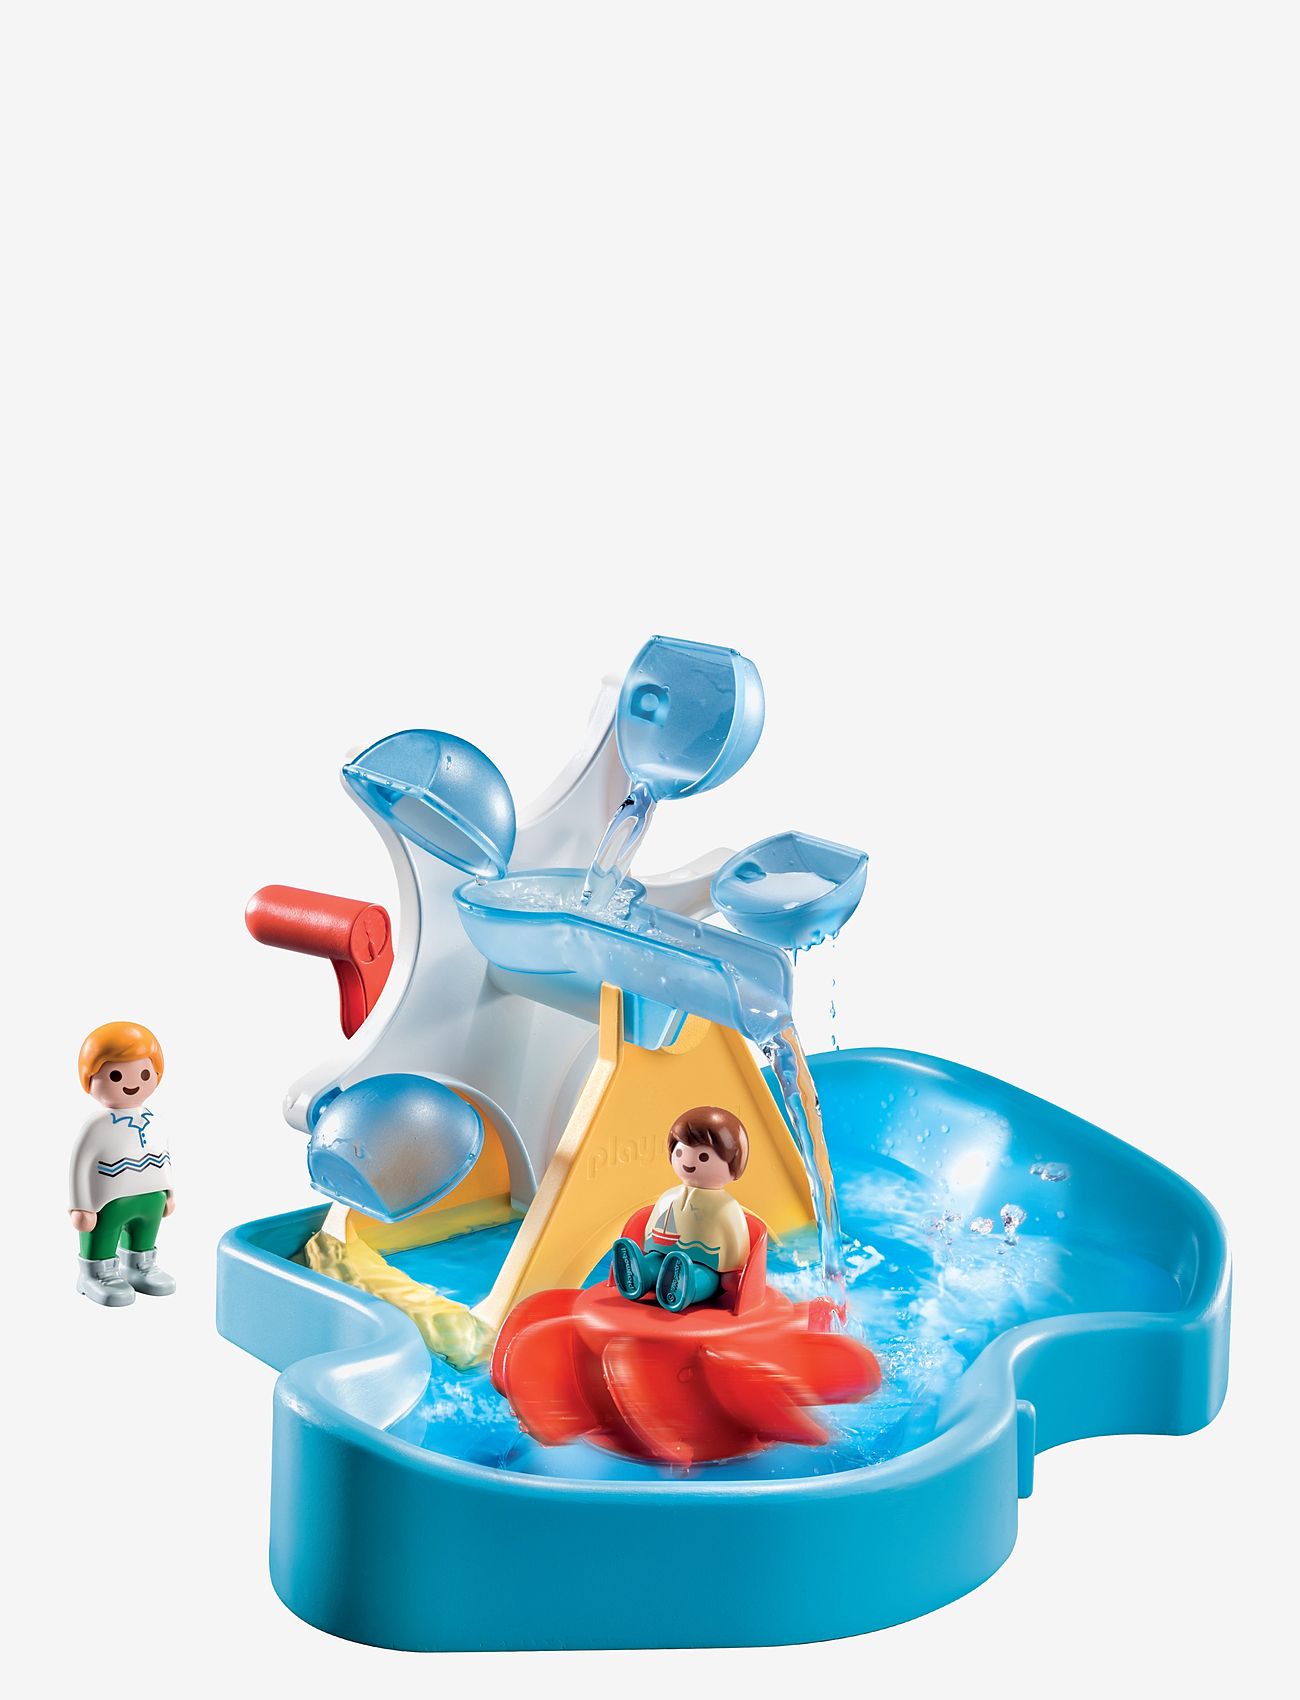 PLAYMOBIL - PLAYMOBIL 1.2.3 Aqua Water Wheel Carousel - 70268 - playmobil 1.2.3 - multicolored - 1